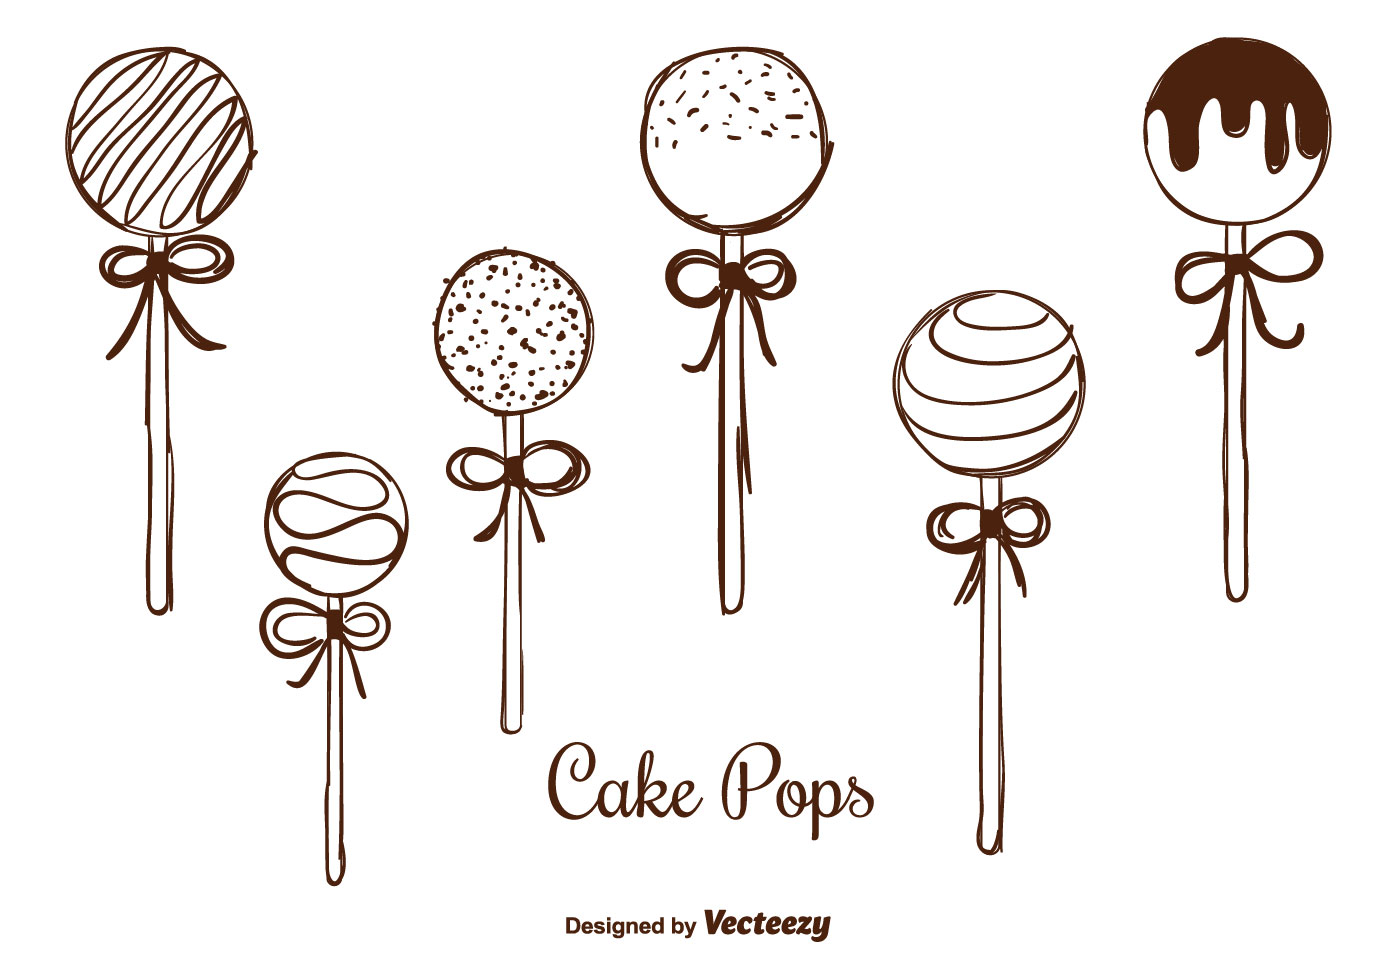 Hand Drawn Cake Pops Vectors - Download Free Vector Art, Stock Graphics